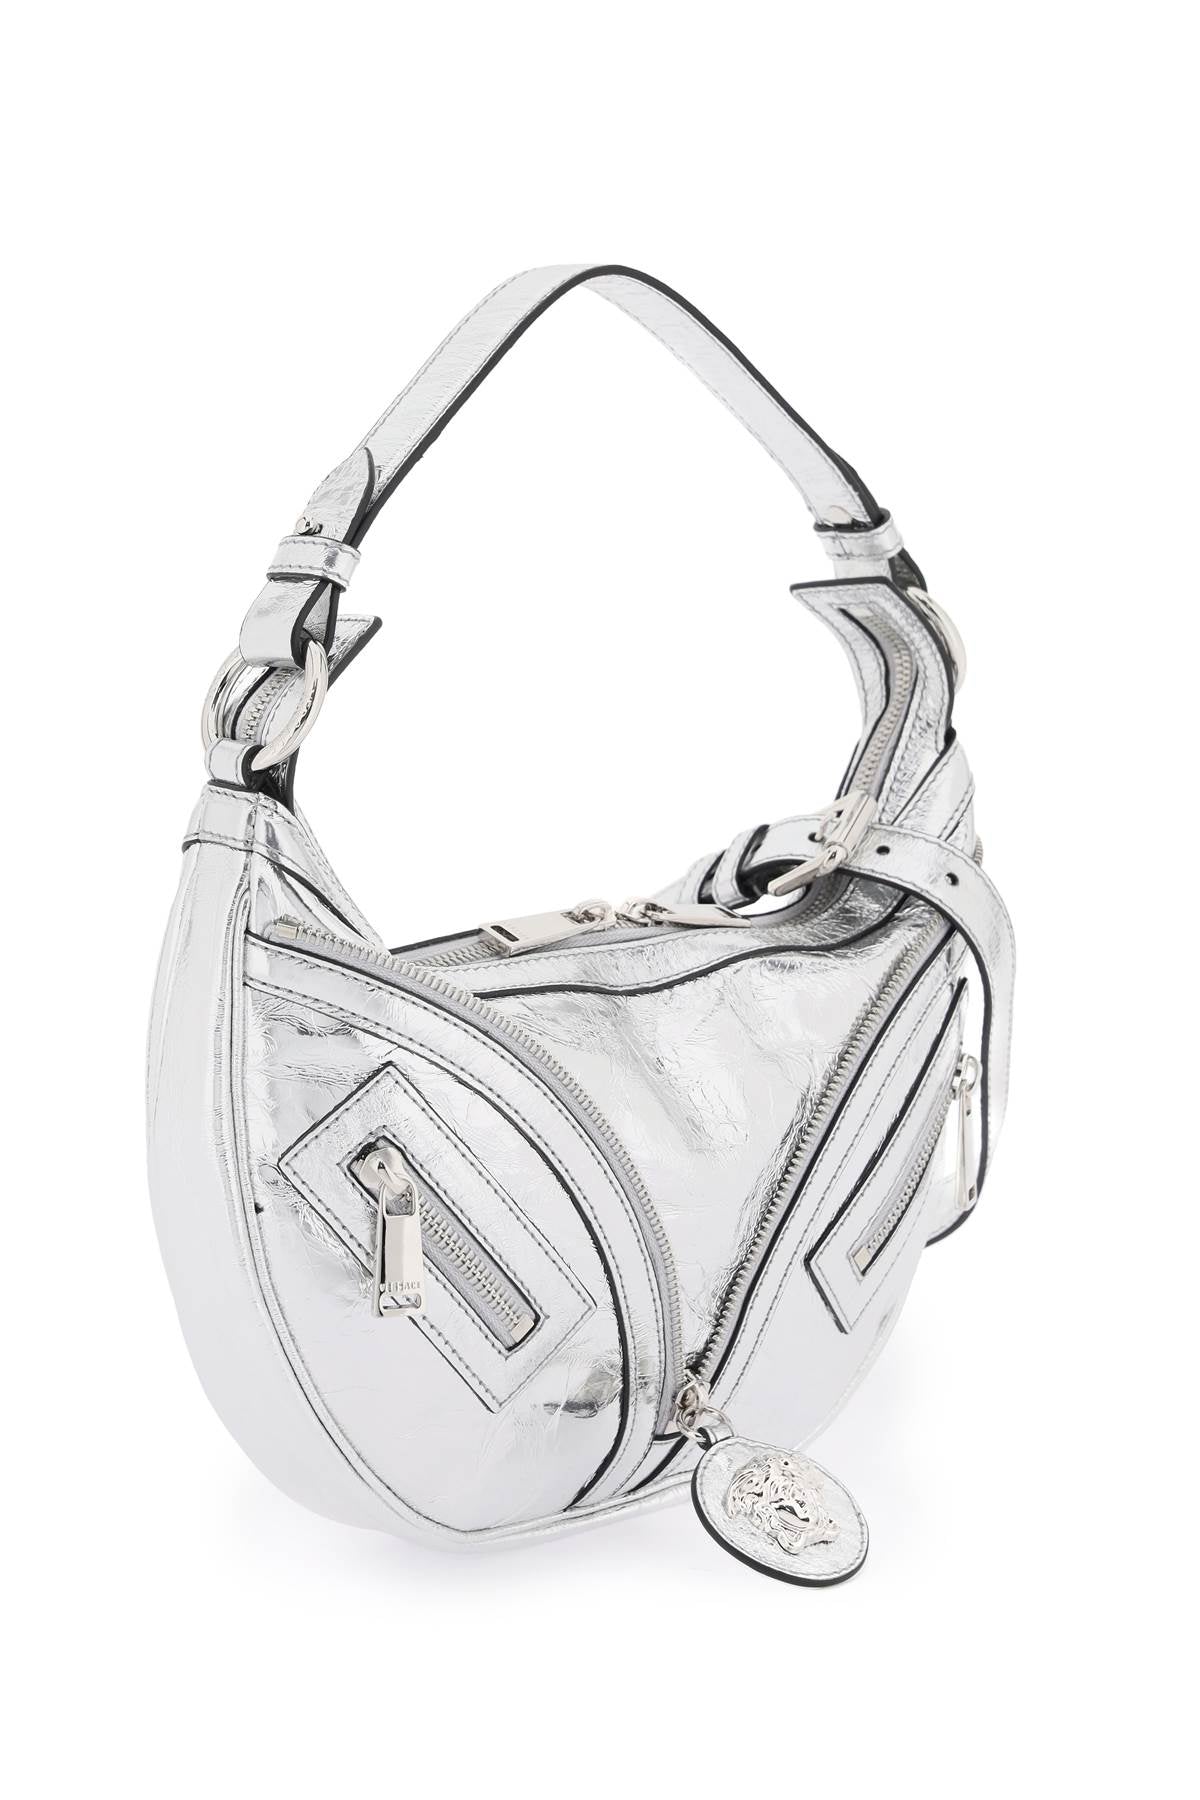 VERSACE Metallic Multicolor Leather Hobo Handbag with Medusa Pendant and Silver Details